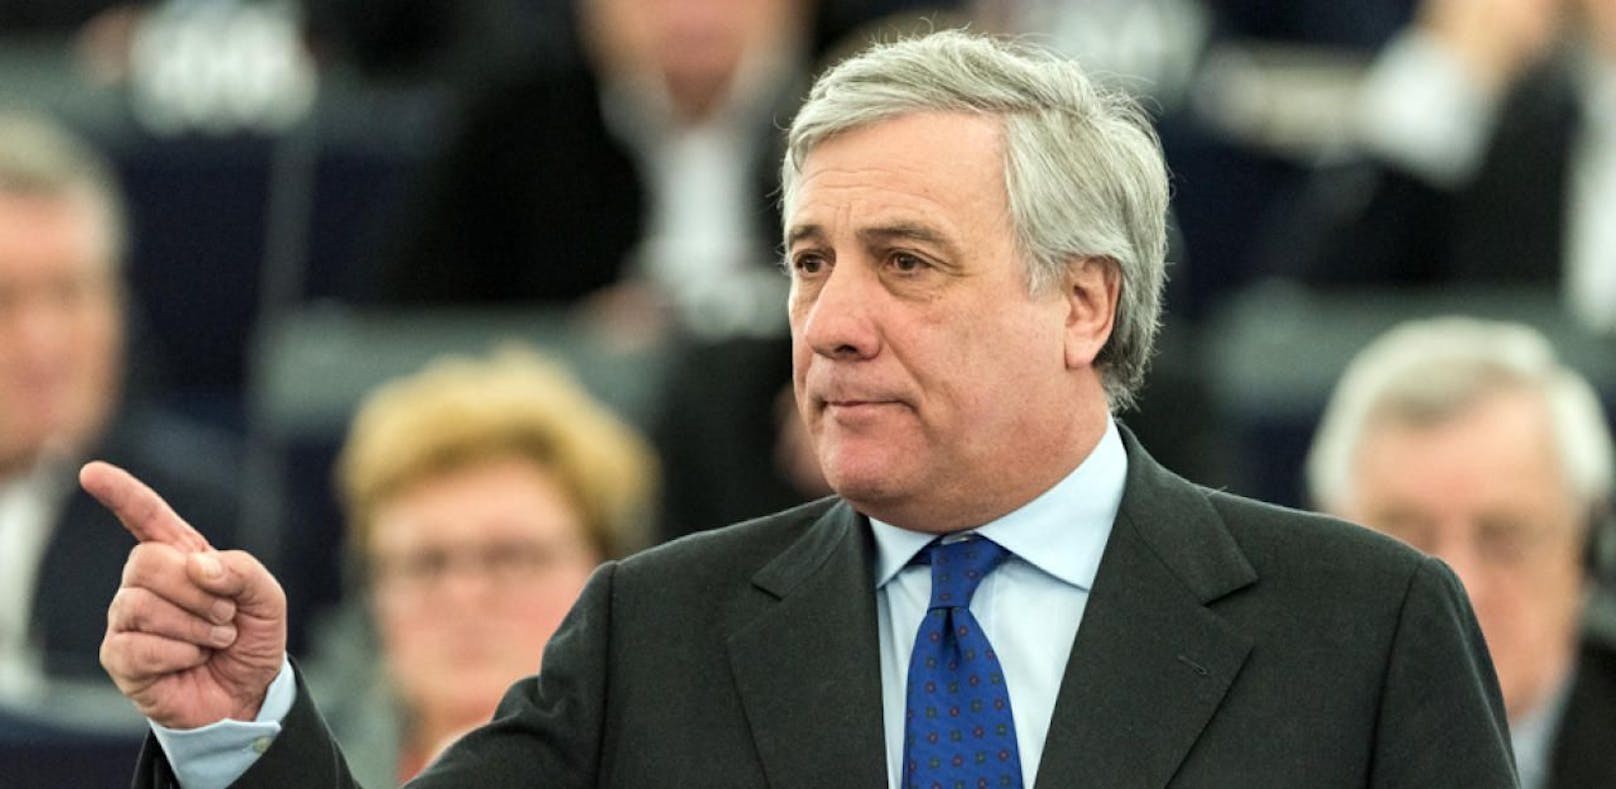 Antonio Tajani ist der Präsident des EU-Parlaments.